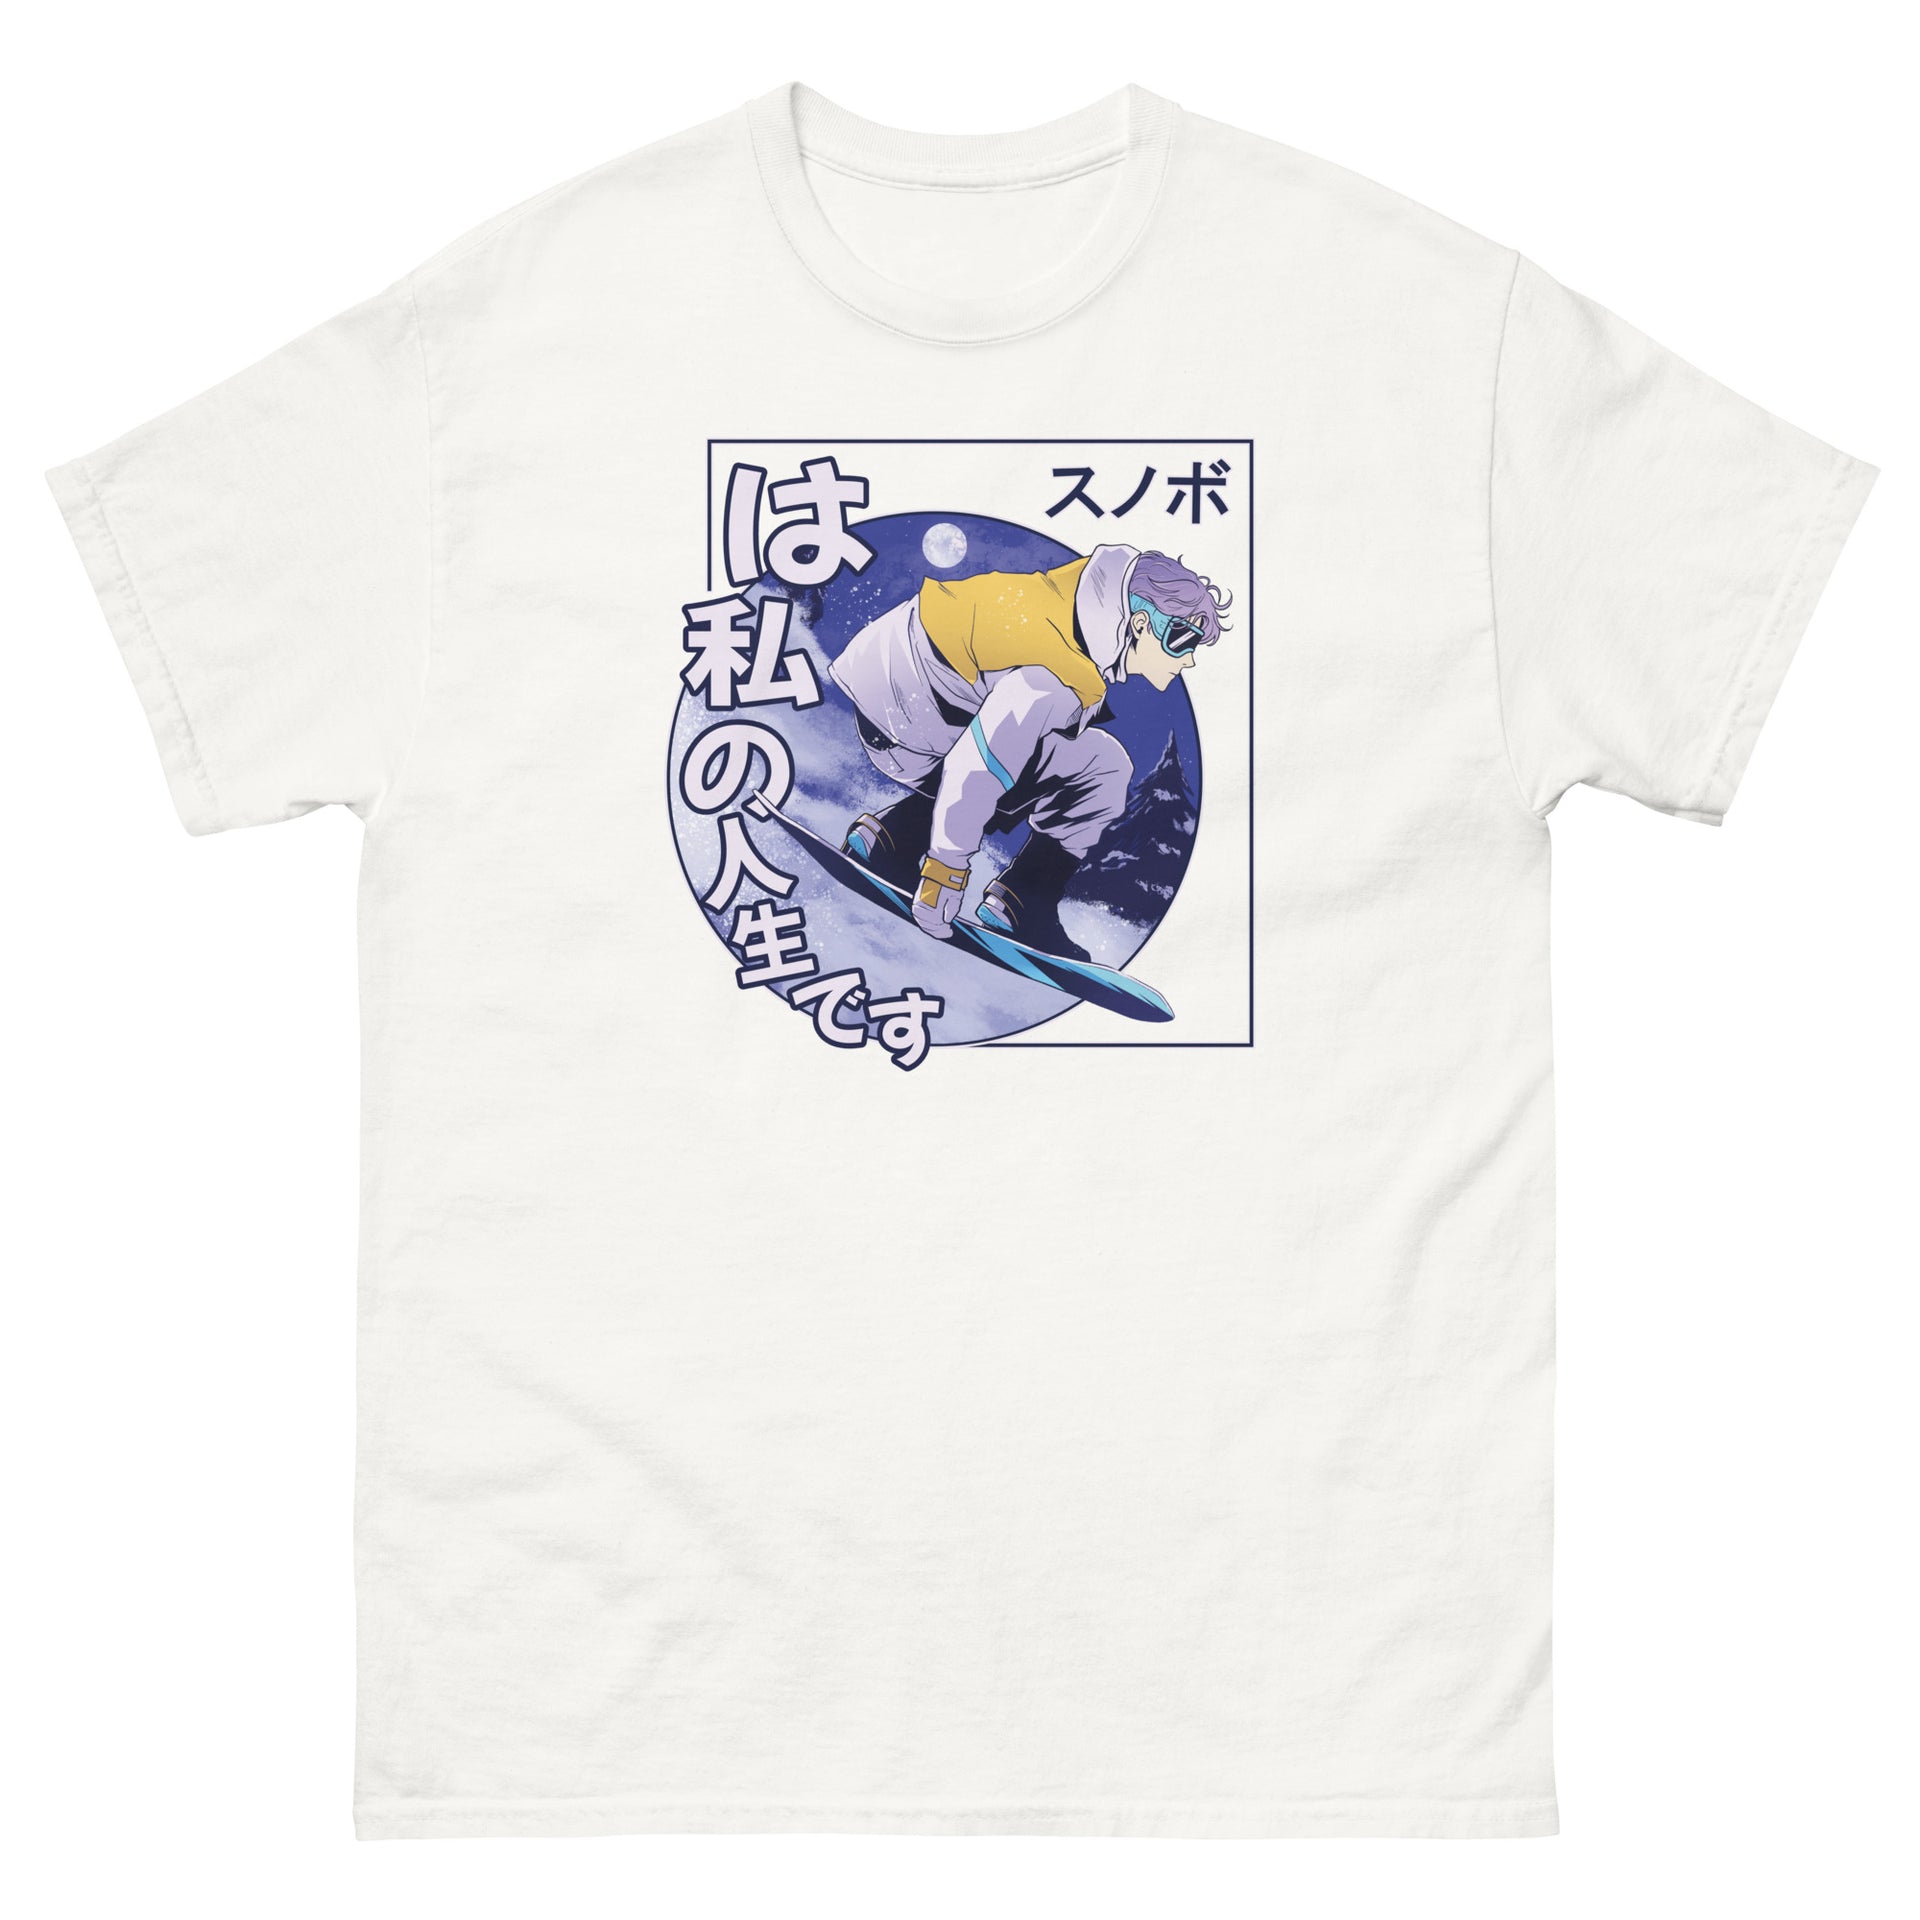 Retro Anime Snowboarder Men's T-Shirt